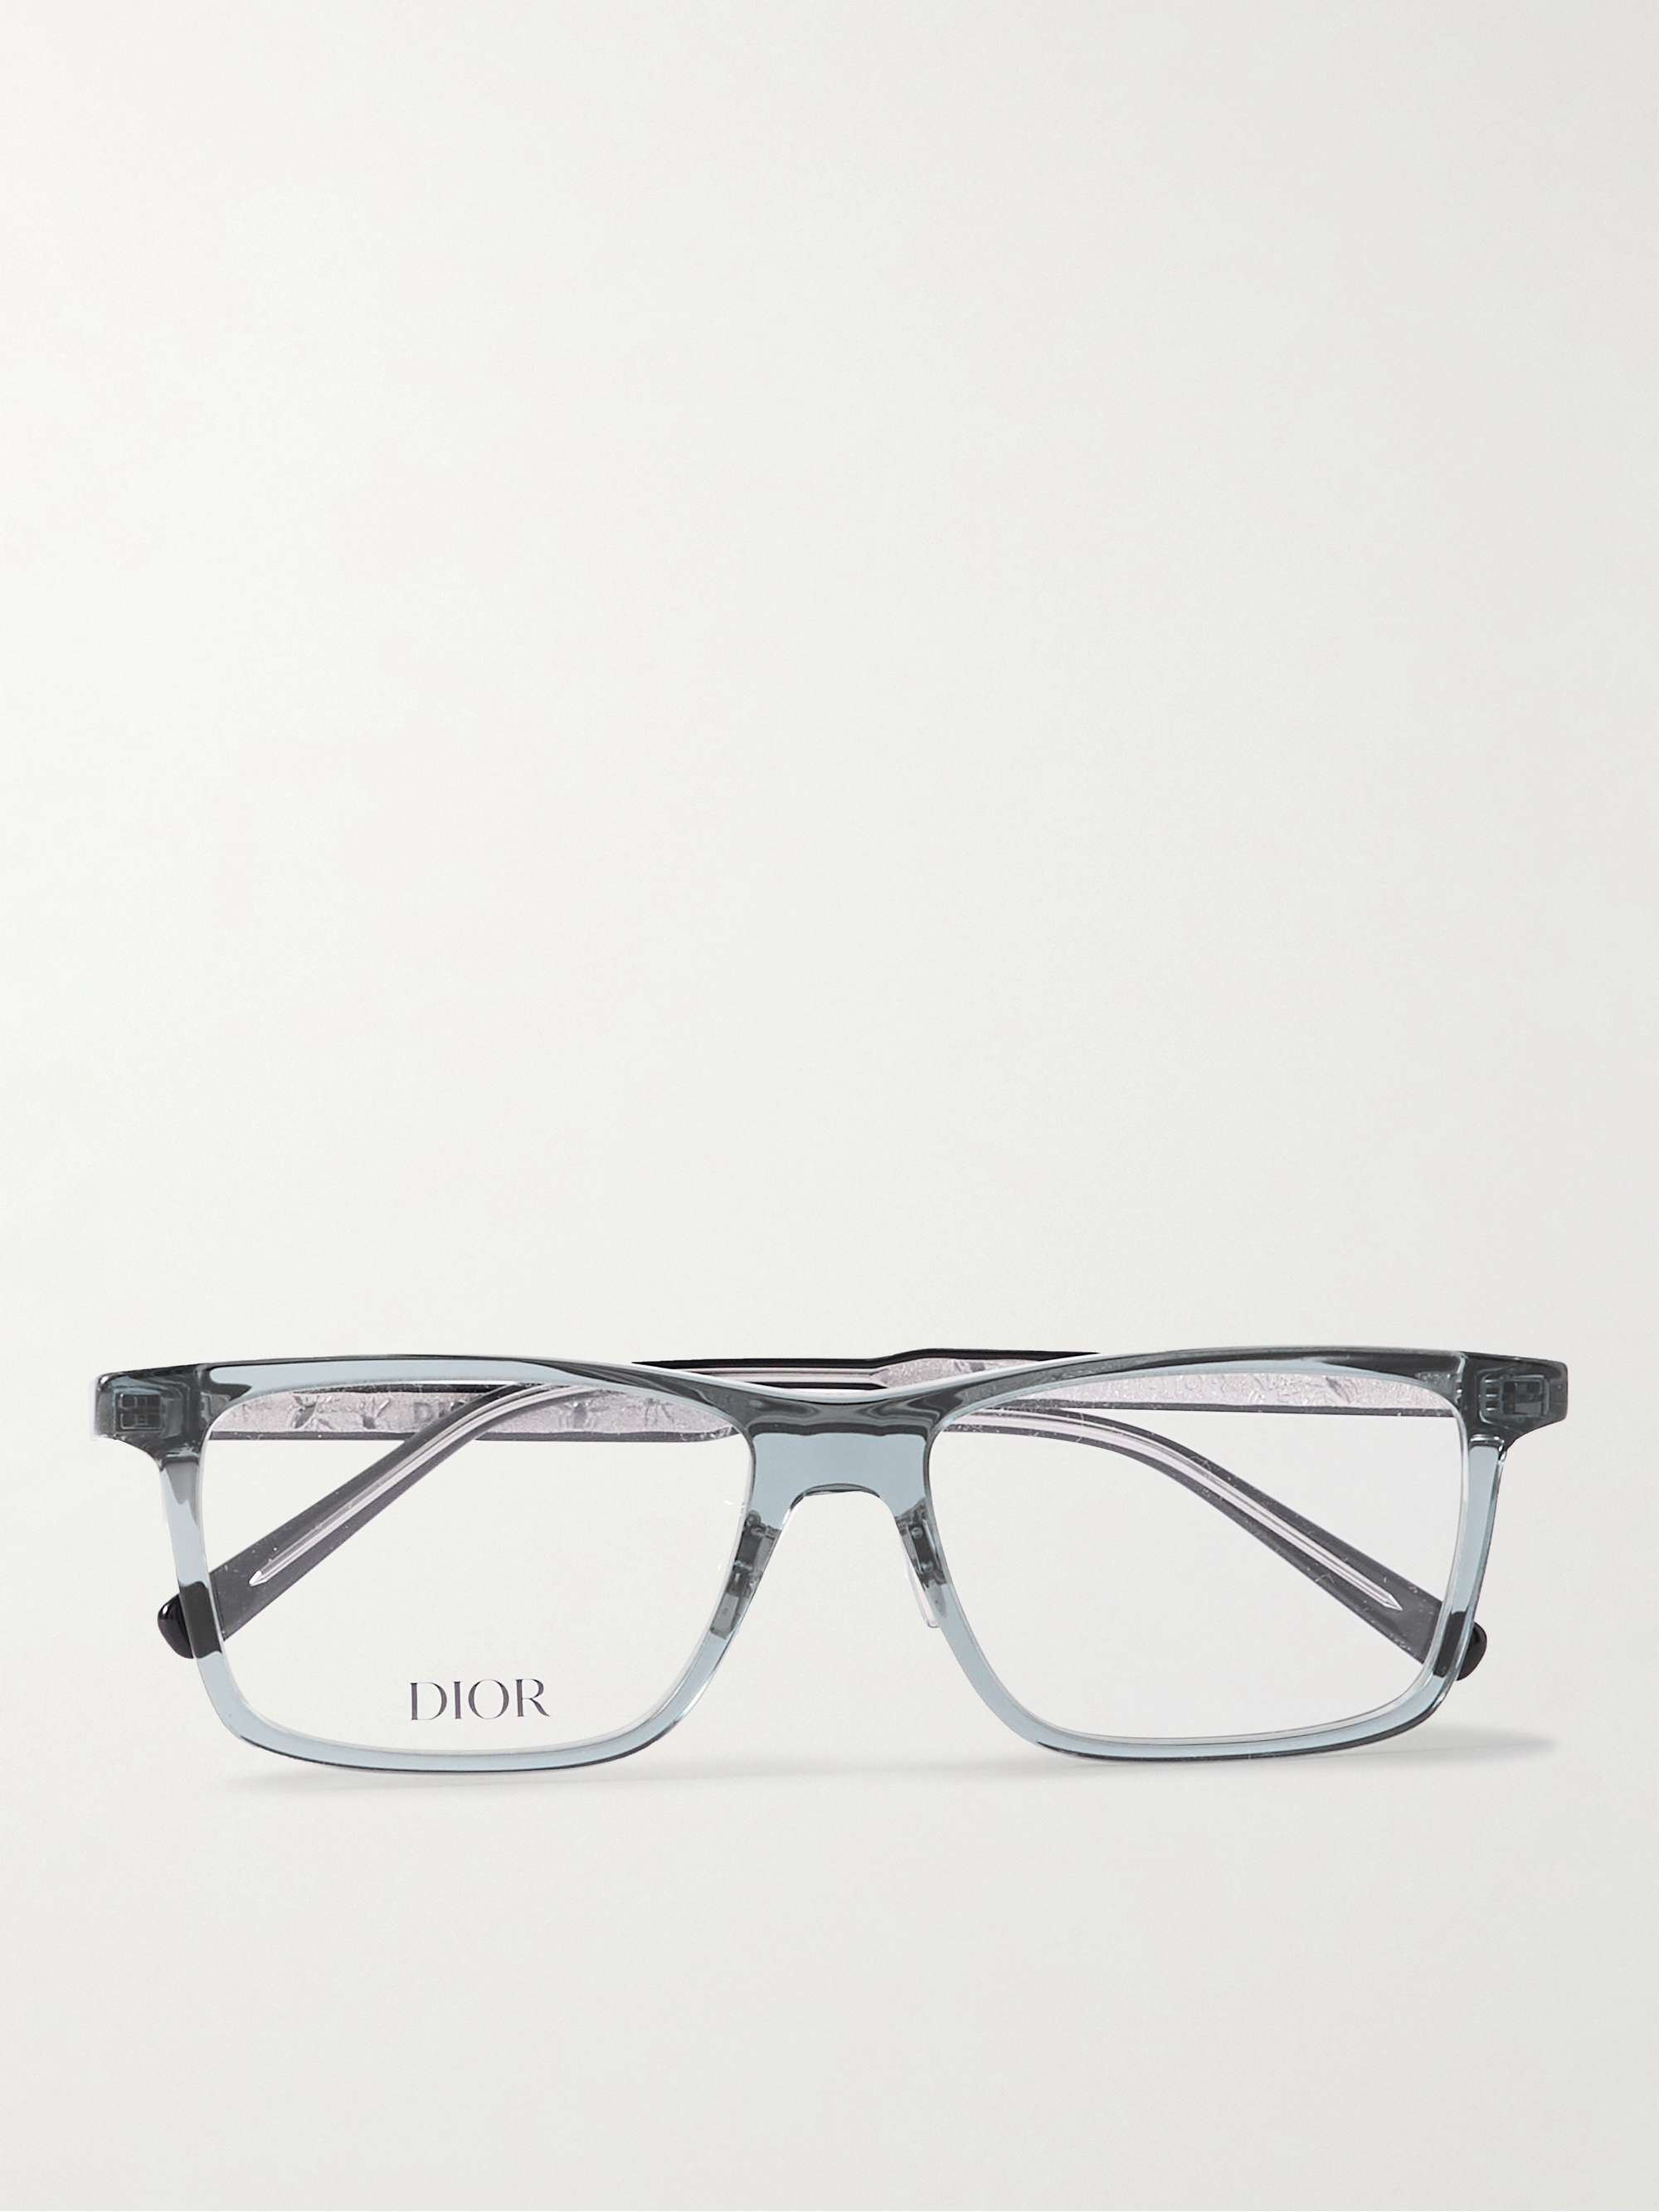 Christian Dior Diortechnicityo8 Eyeglasses Frame Mens Full Rim Rectangular   EyeSpecscom